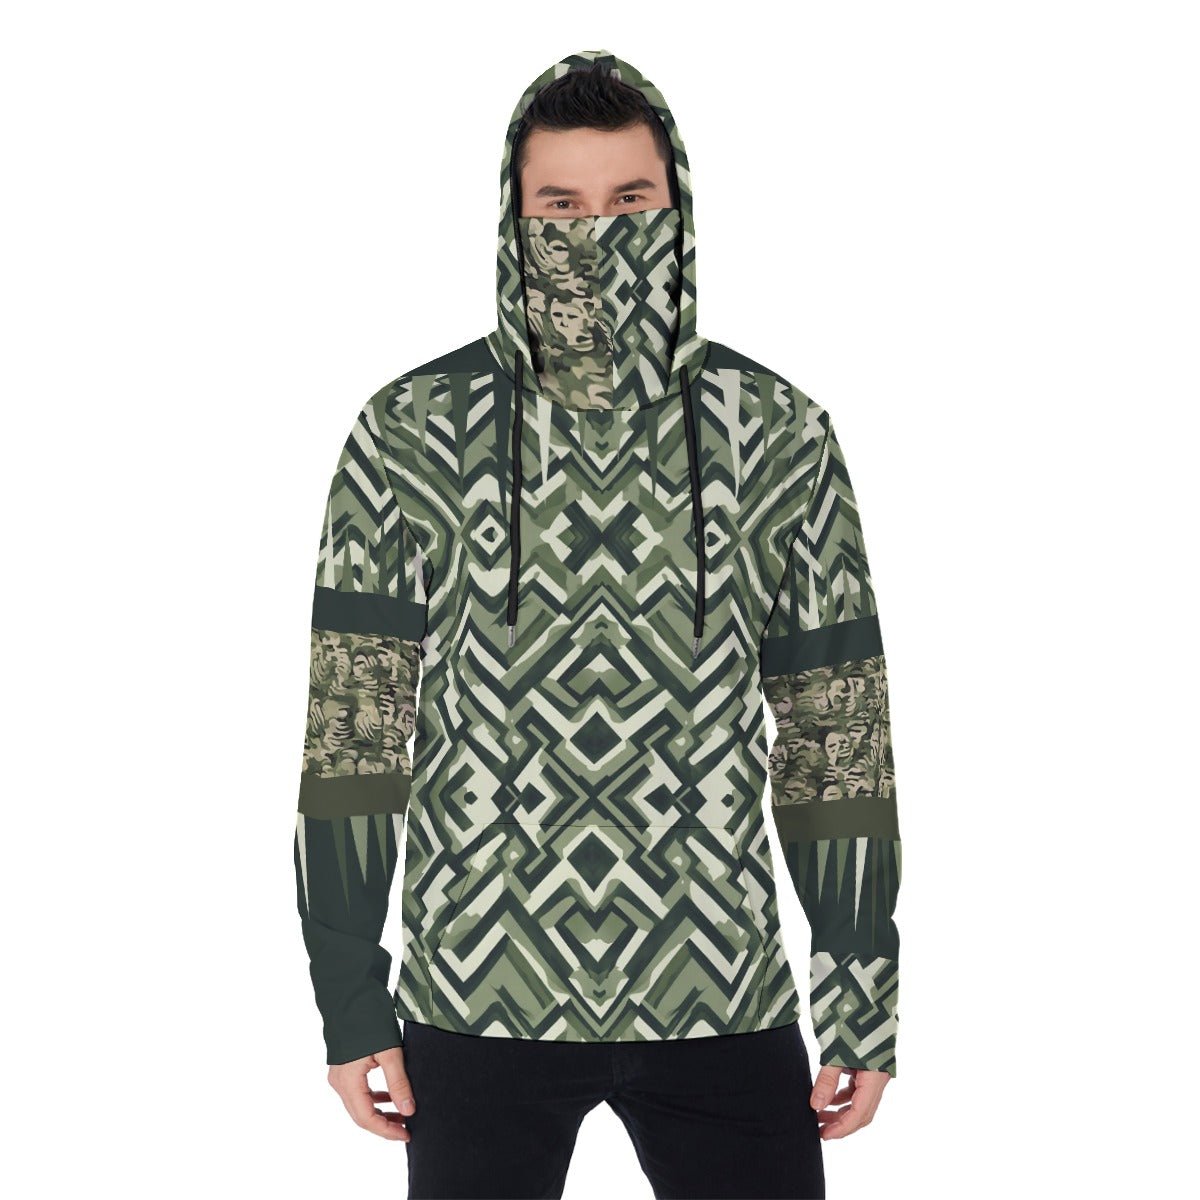 Anti-facial recognition Print Men's Fleece Hoodie With Mask - Nikikw Designs